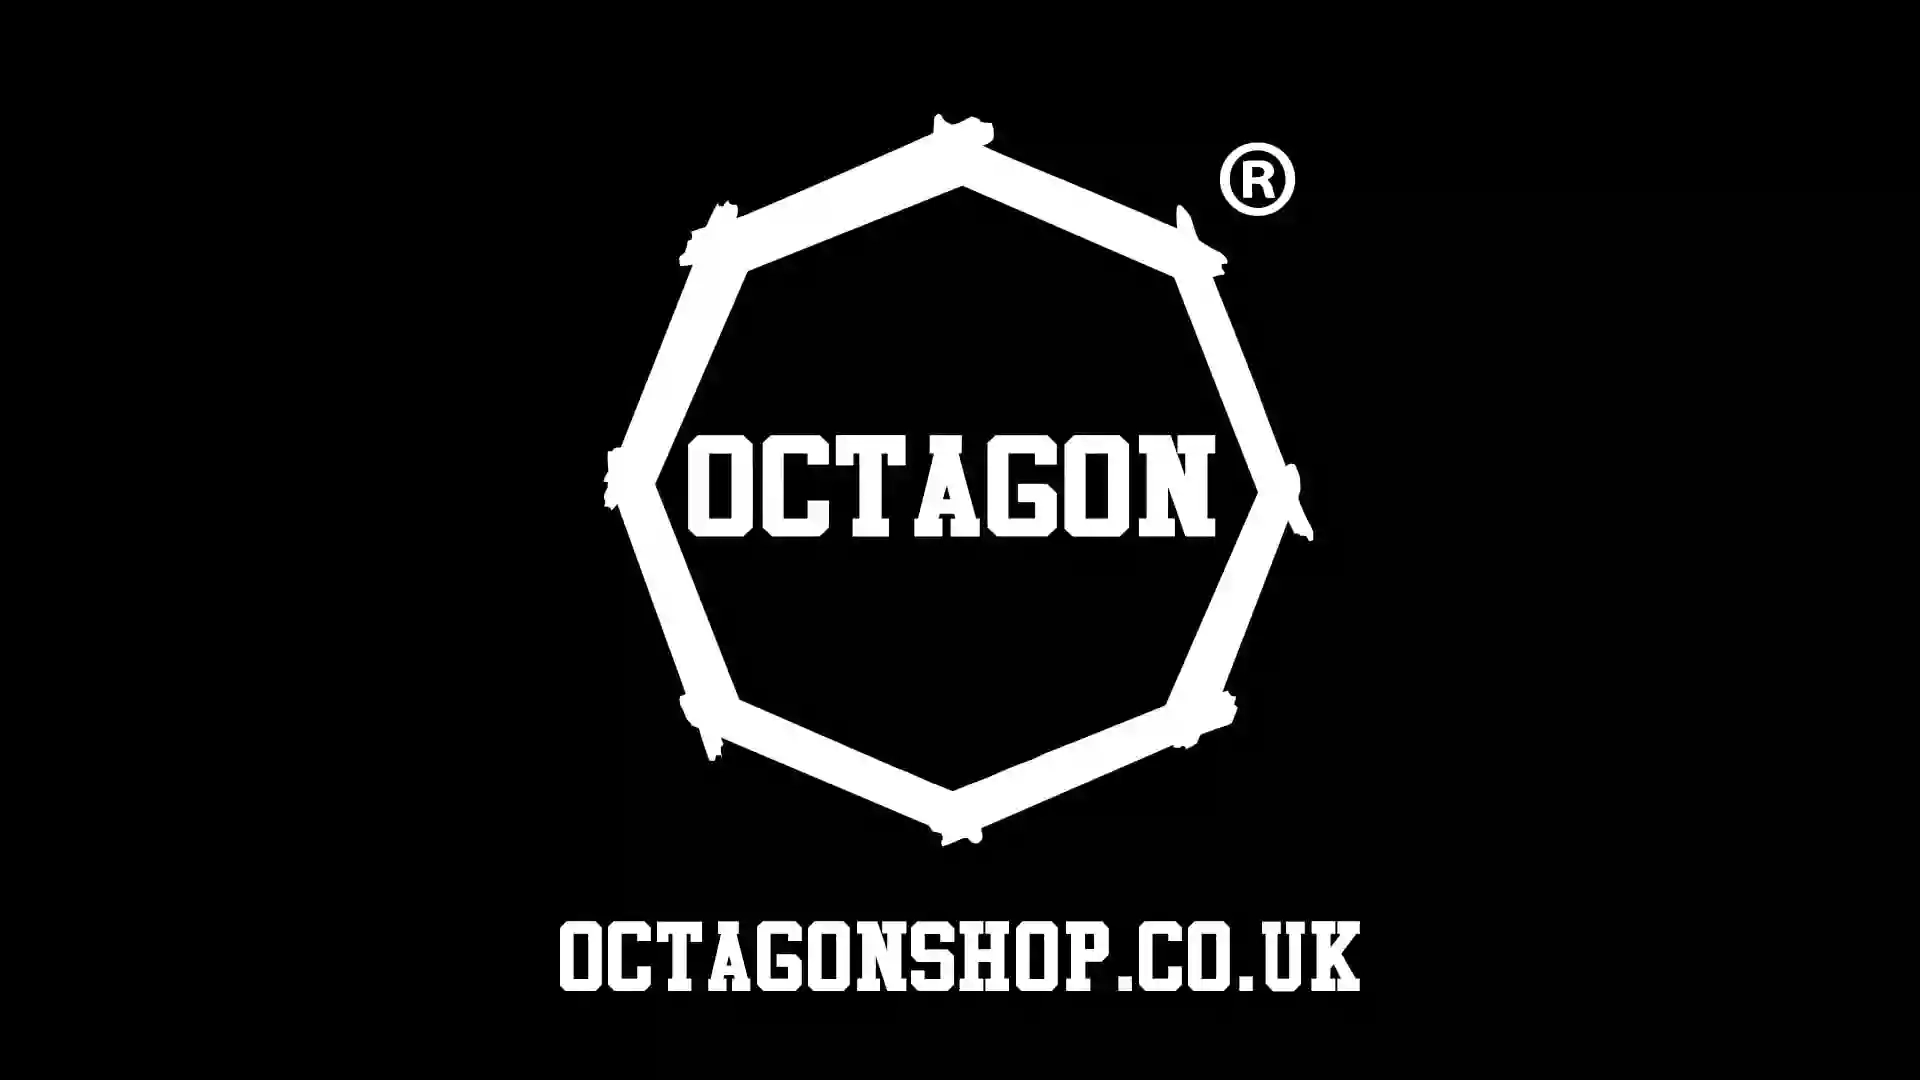 Octagon shop UK